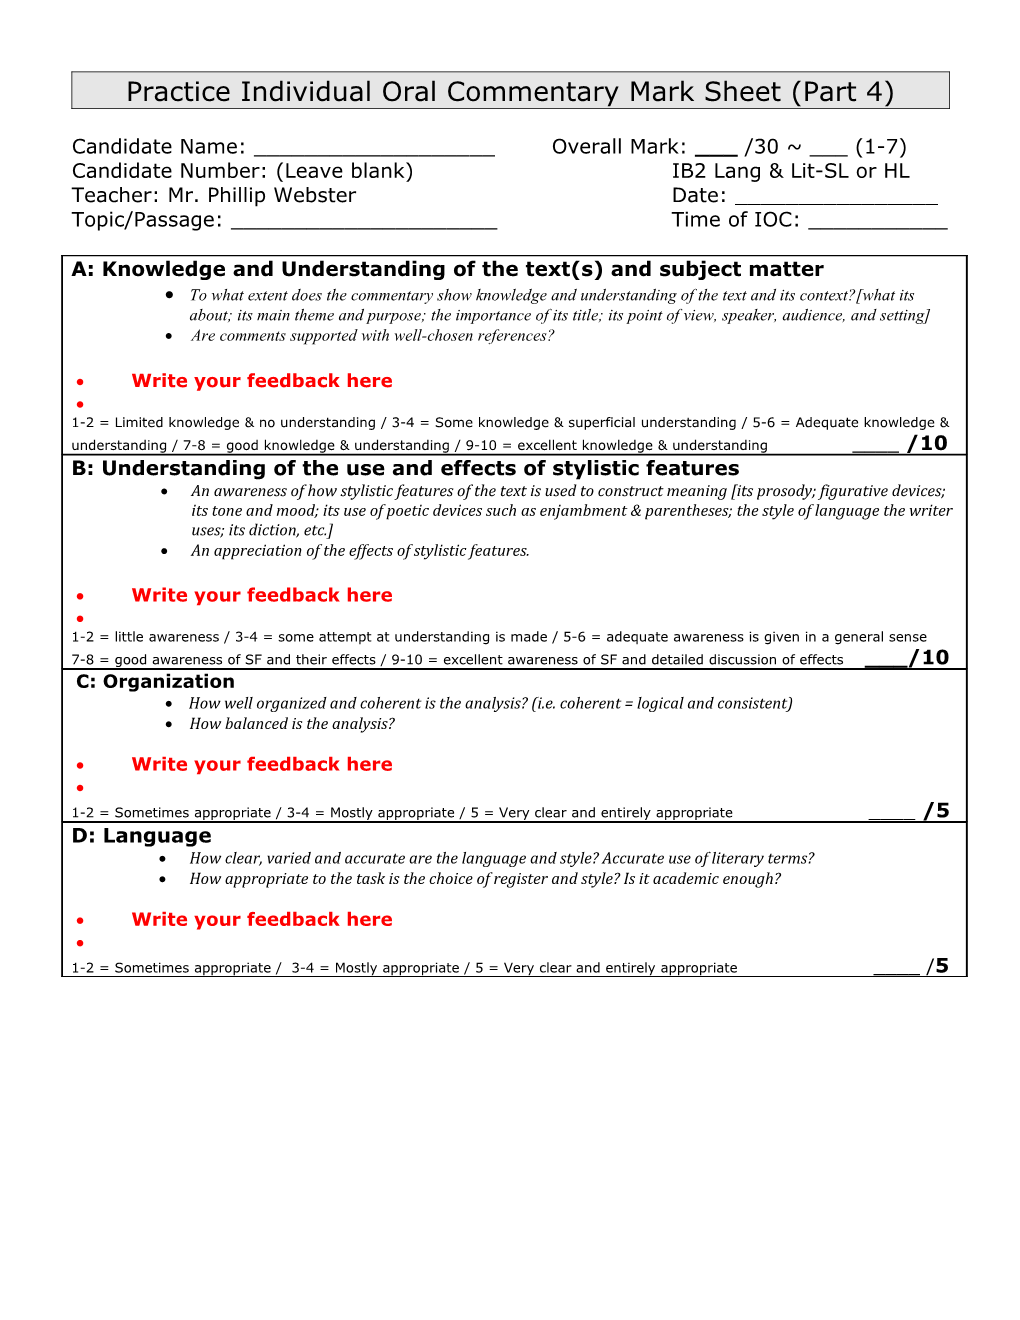 IB A1 Standard: Oral Assessment Mark Sheet